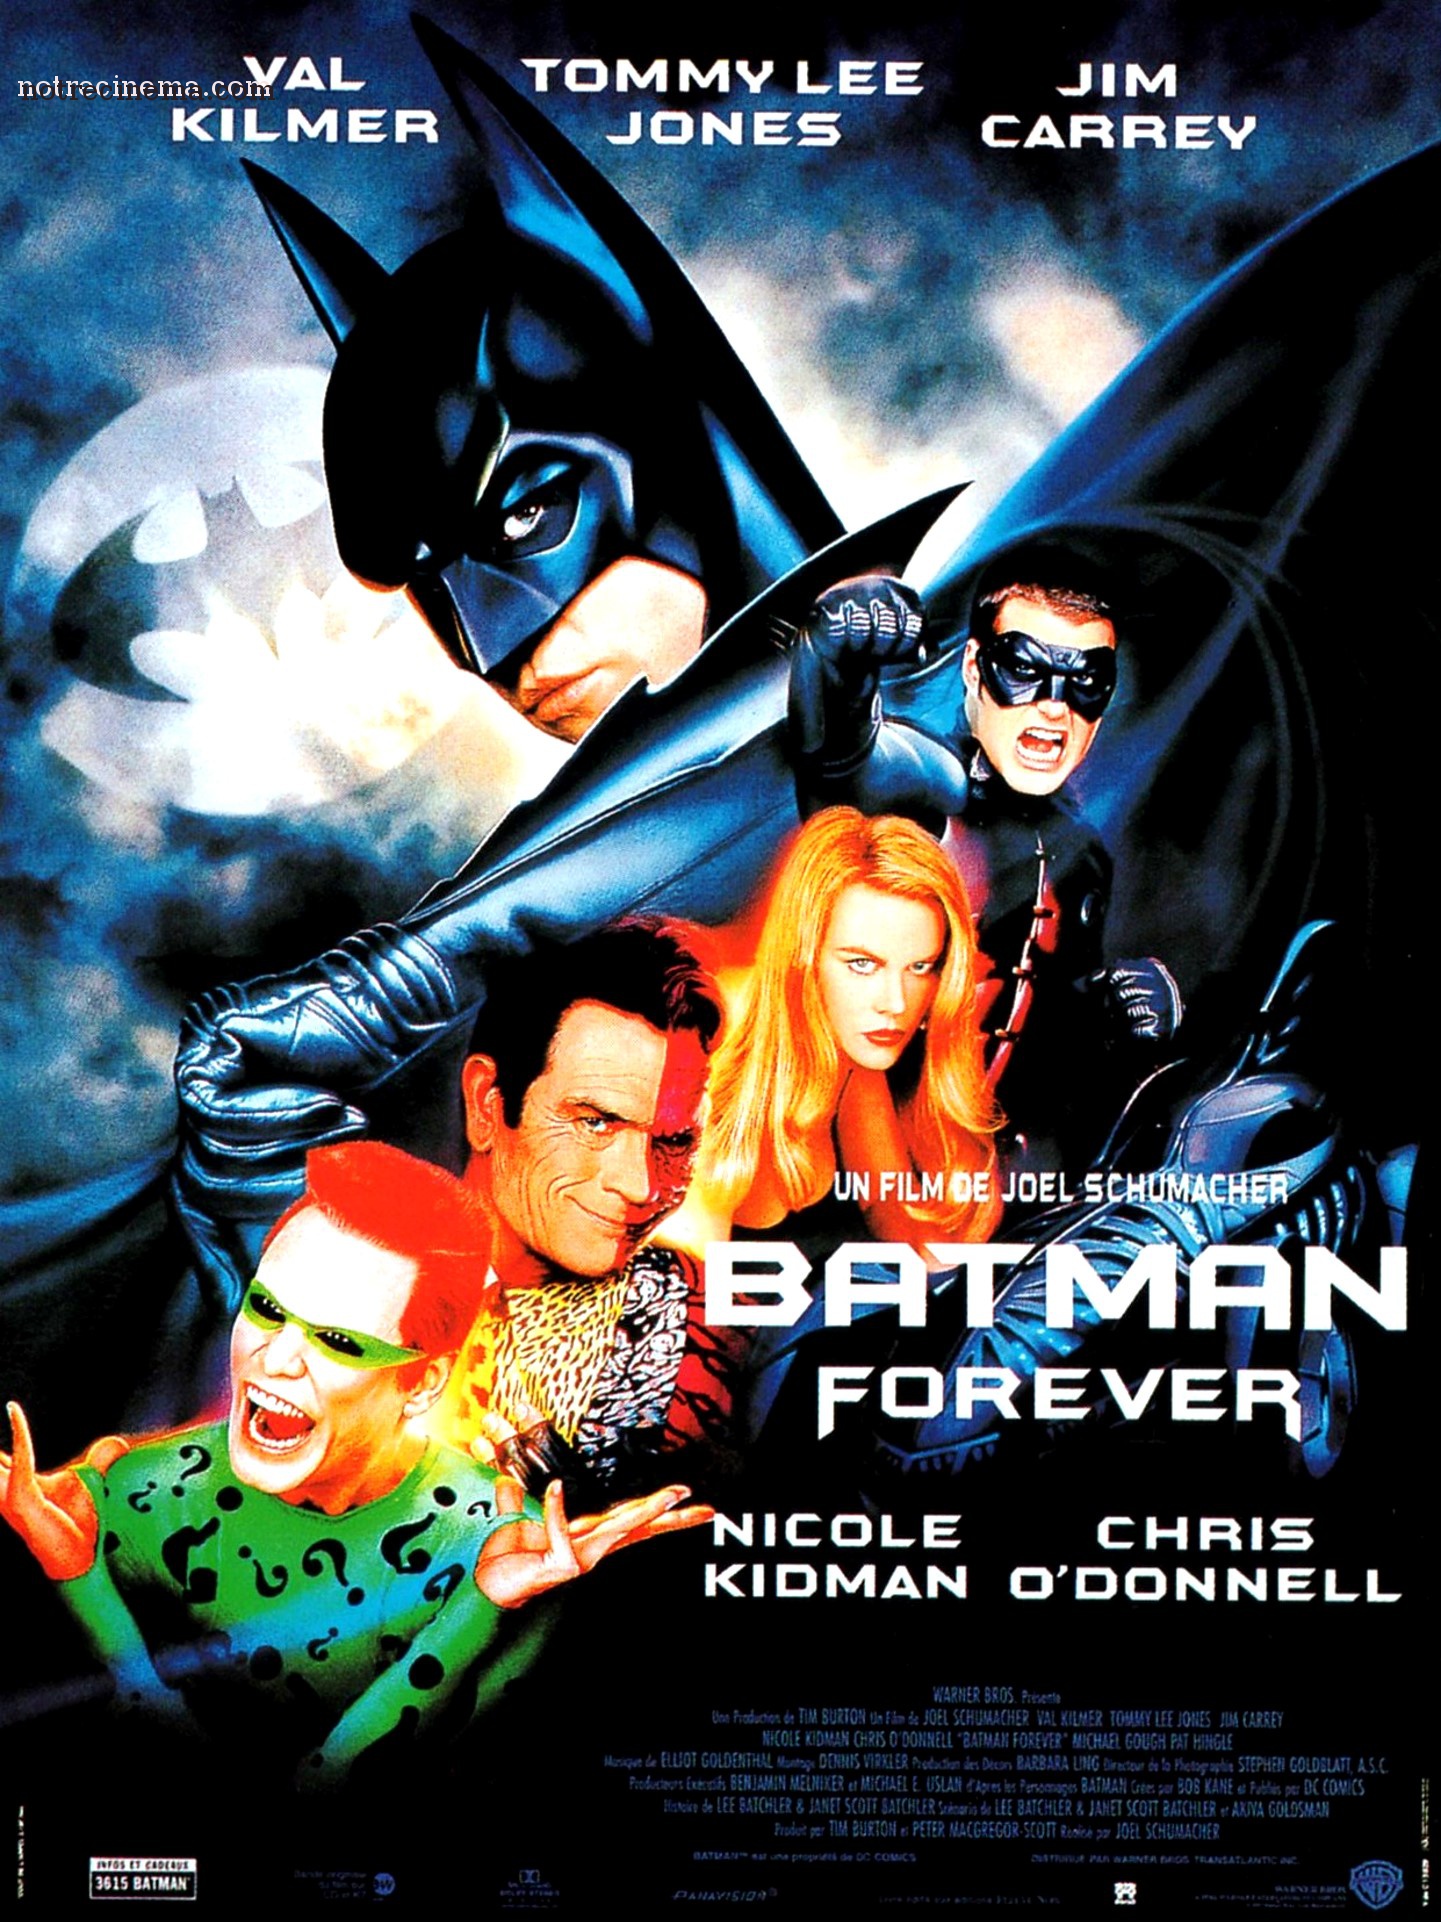 the movie Batman forever